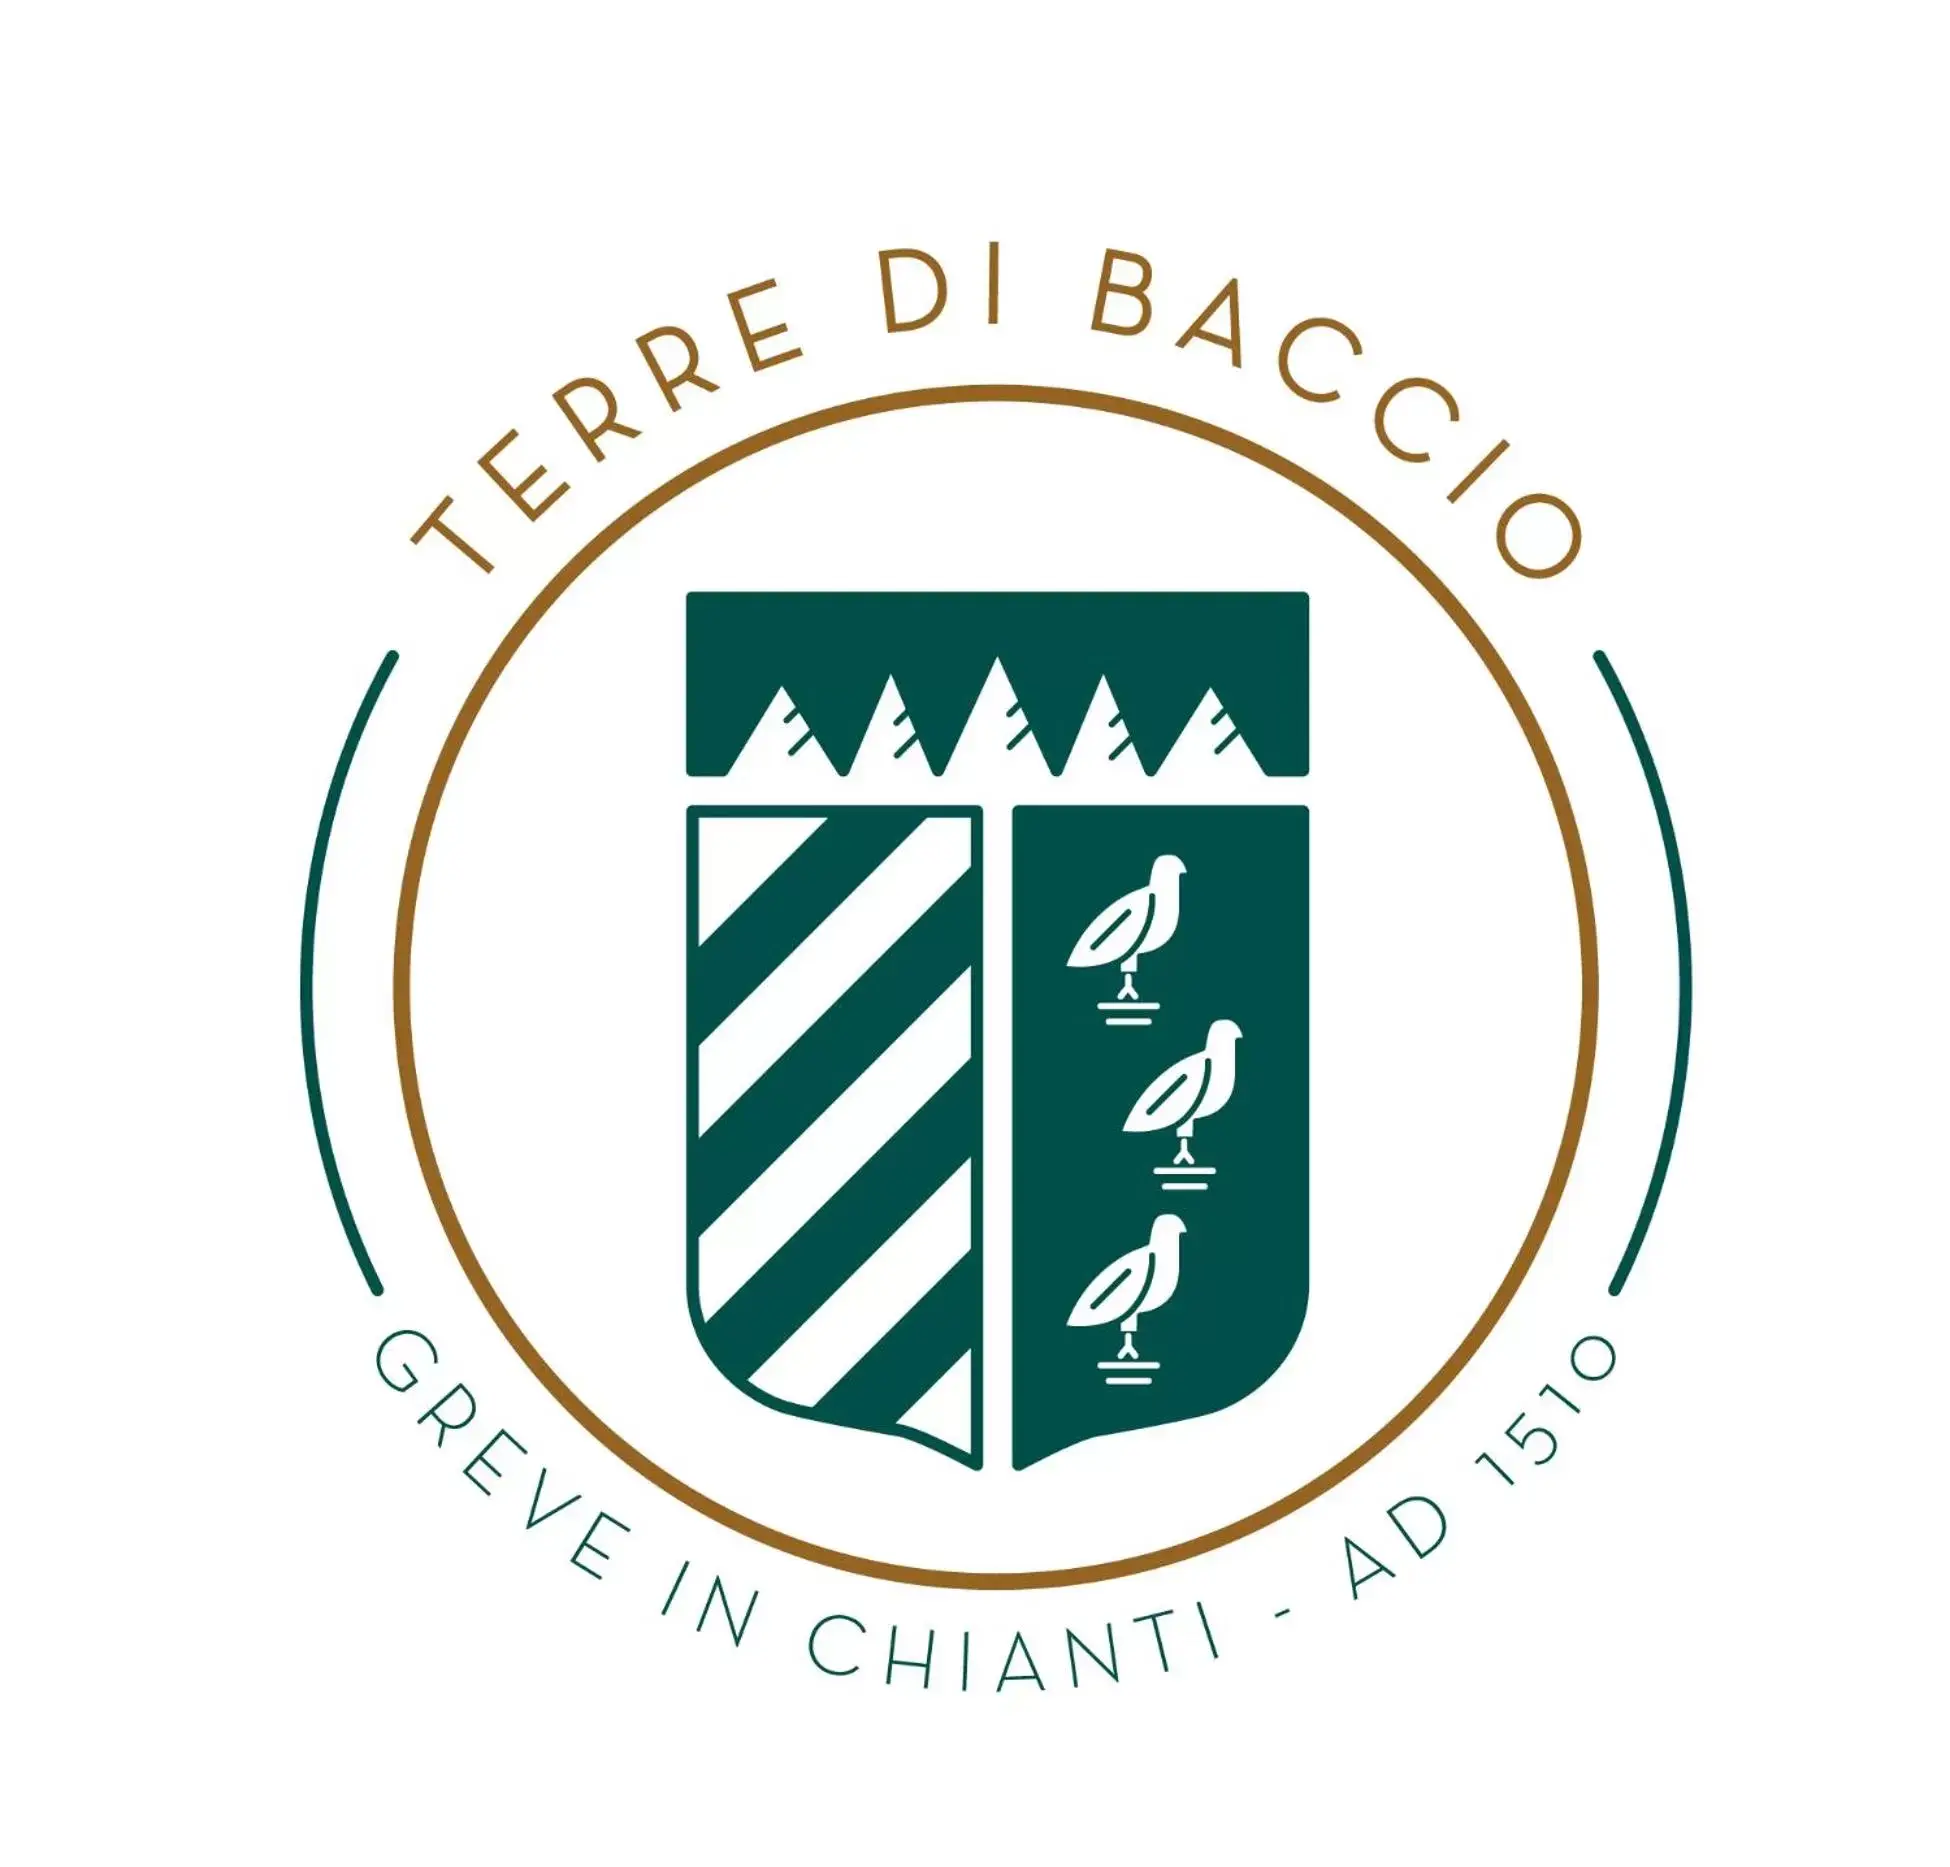 Property logo or sign, Property Logo/Sign in Terre di Baccio